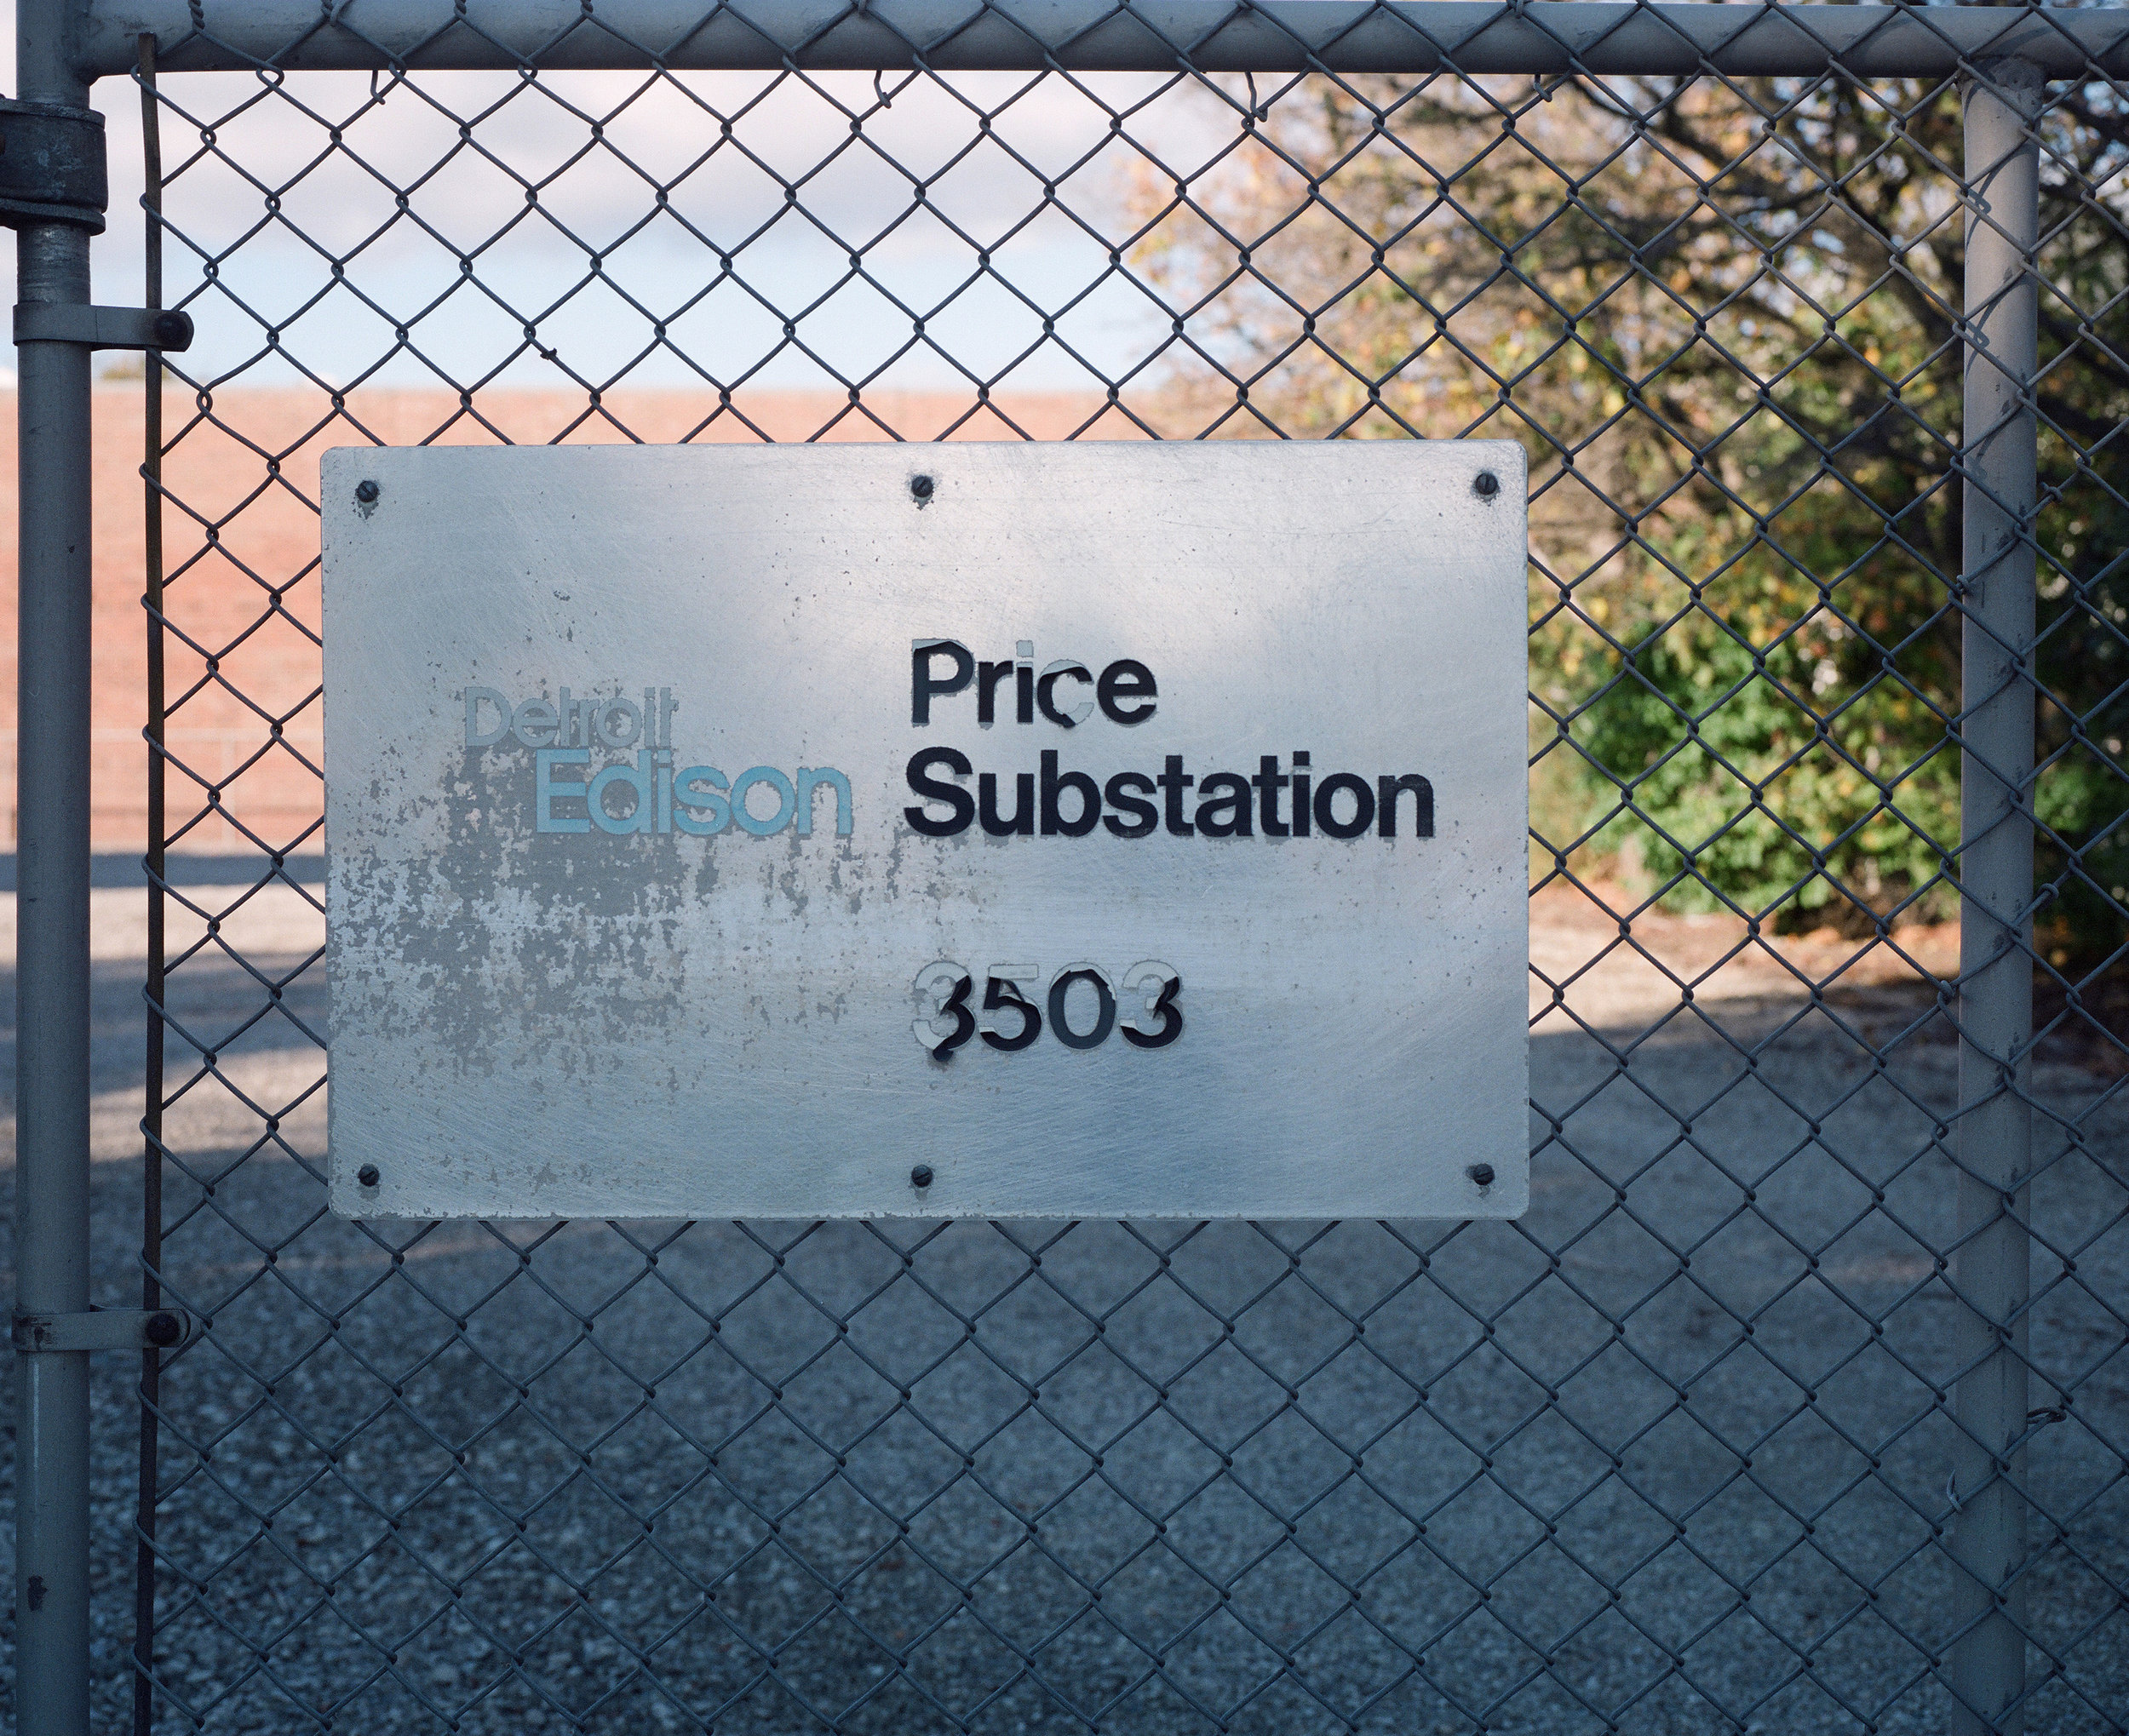  Detroit Edison, Price Substation, Ann Arbor, MI, October 2016 